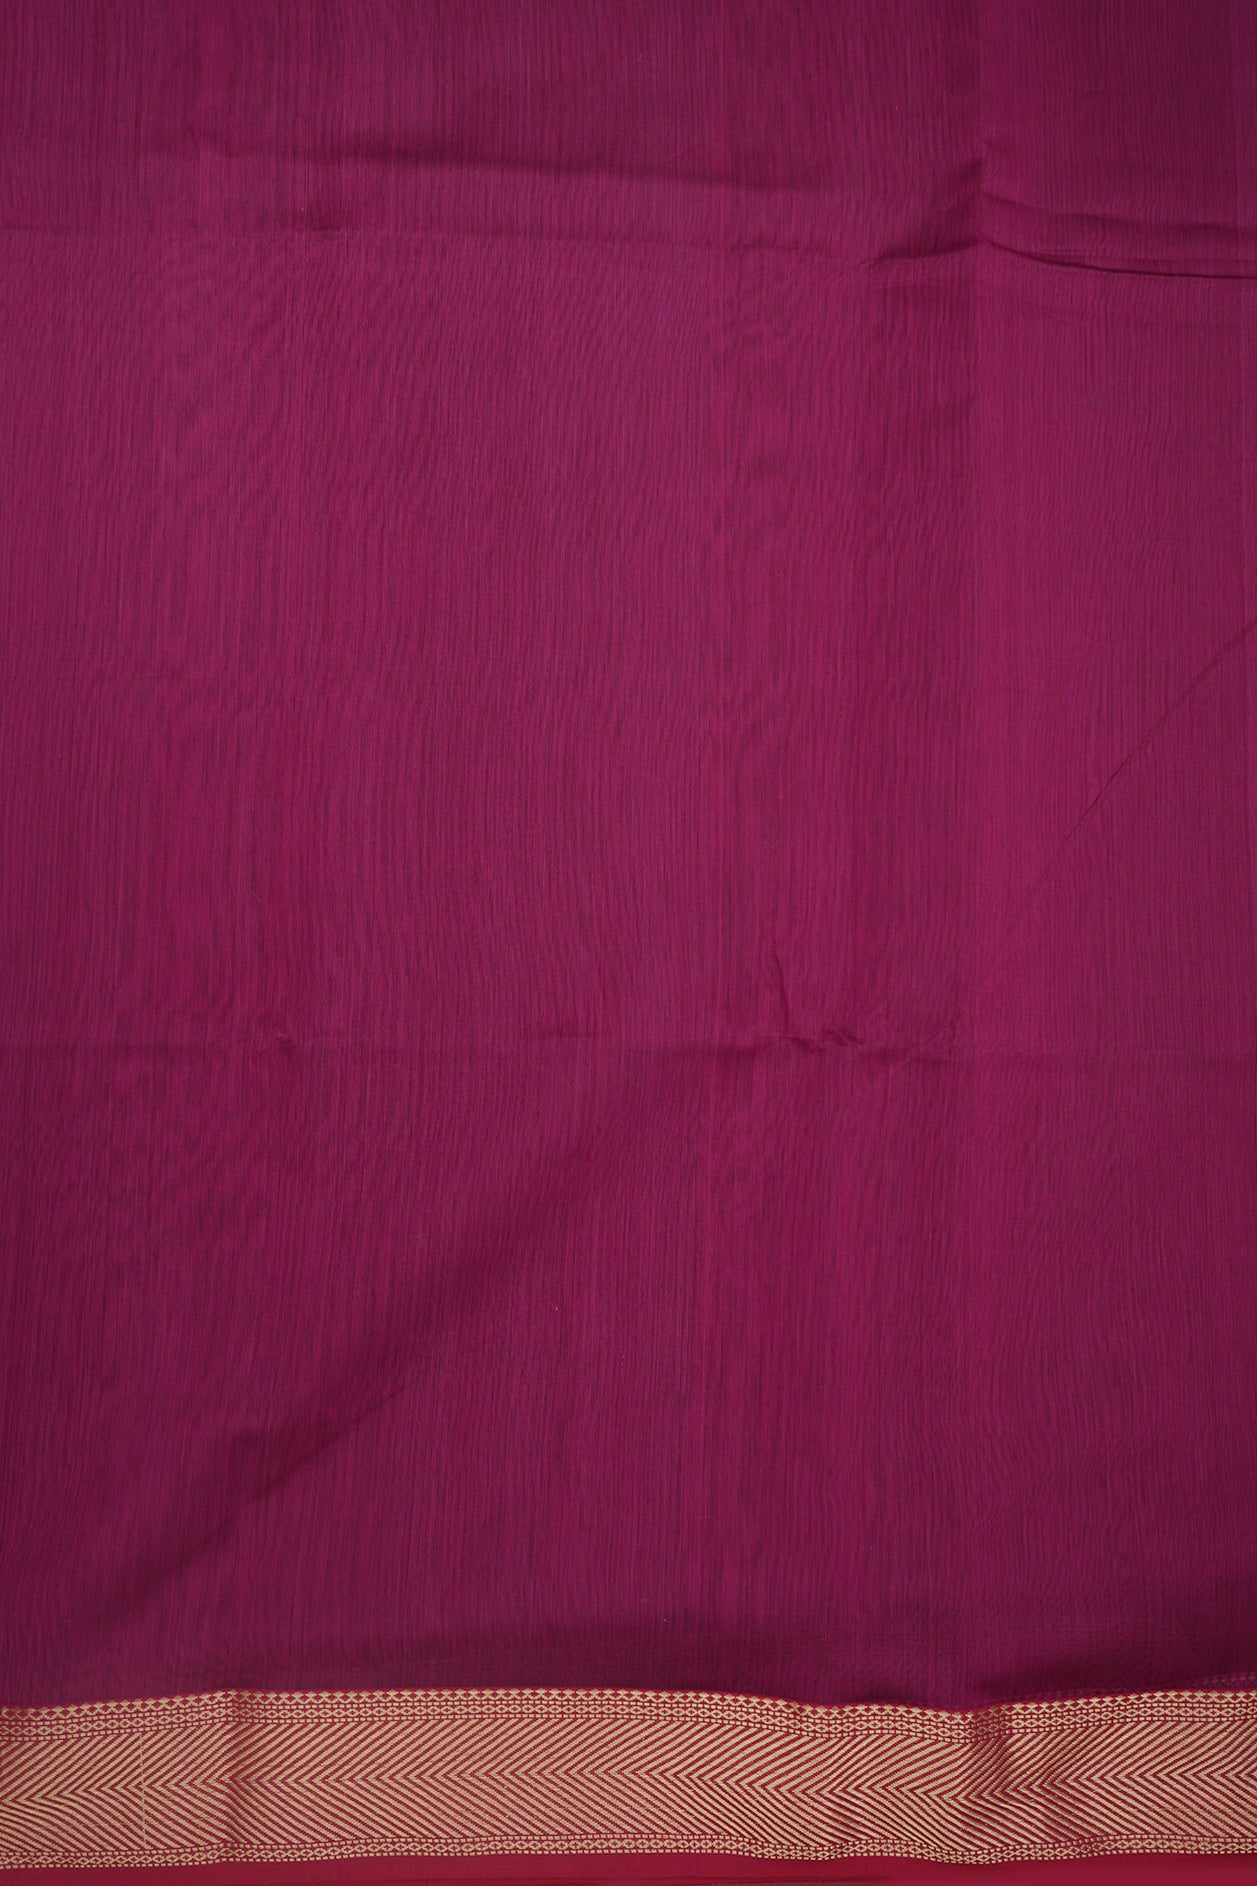 Vanki Design Zari Border With Purple Rose Maheswari Silk Cotton Saree